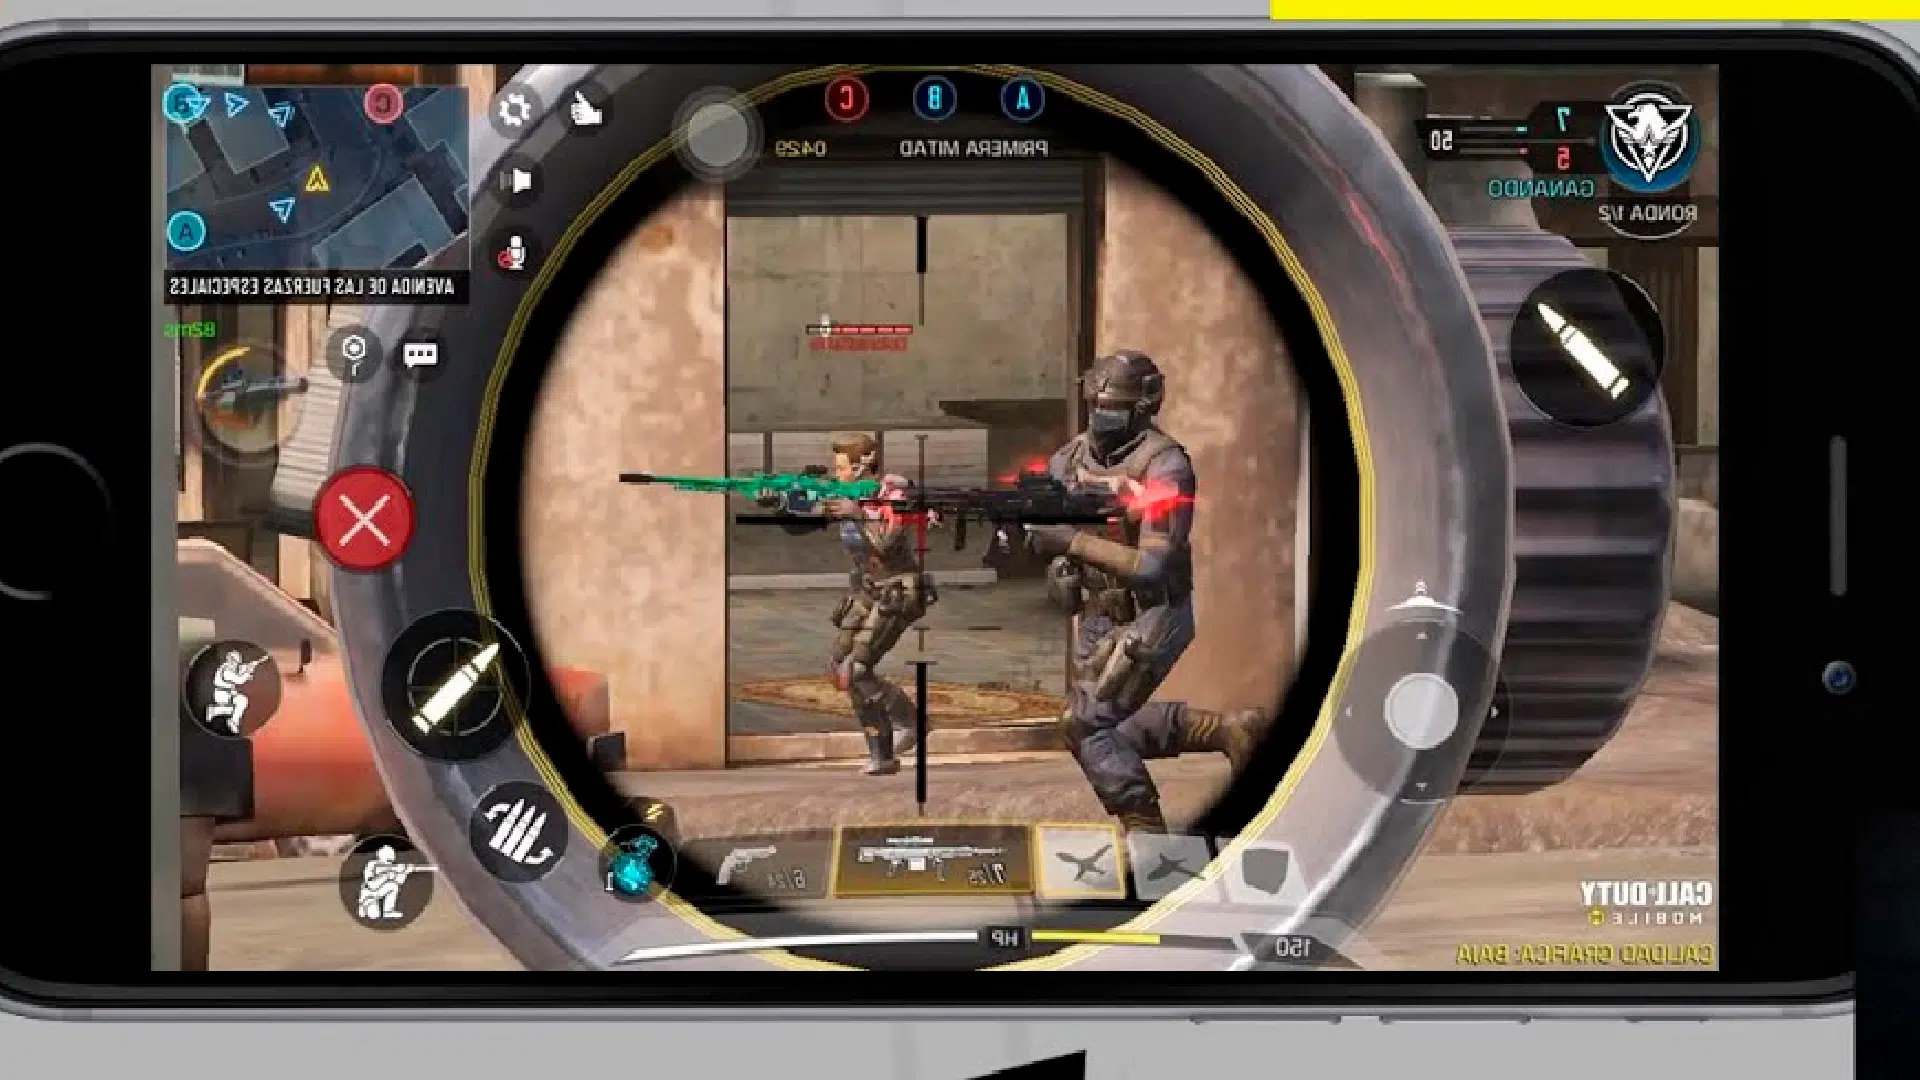 Activar el giroscopio en Call of Duty Mobile